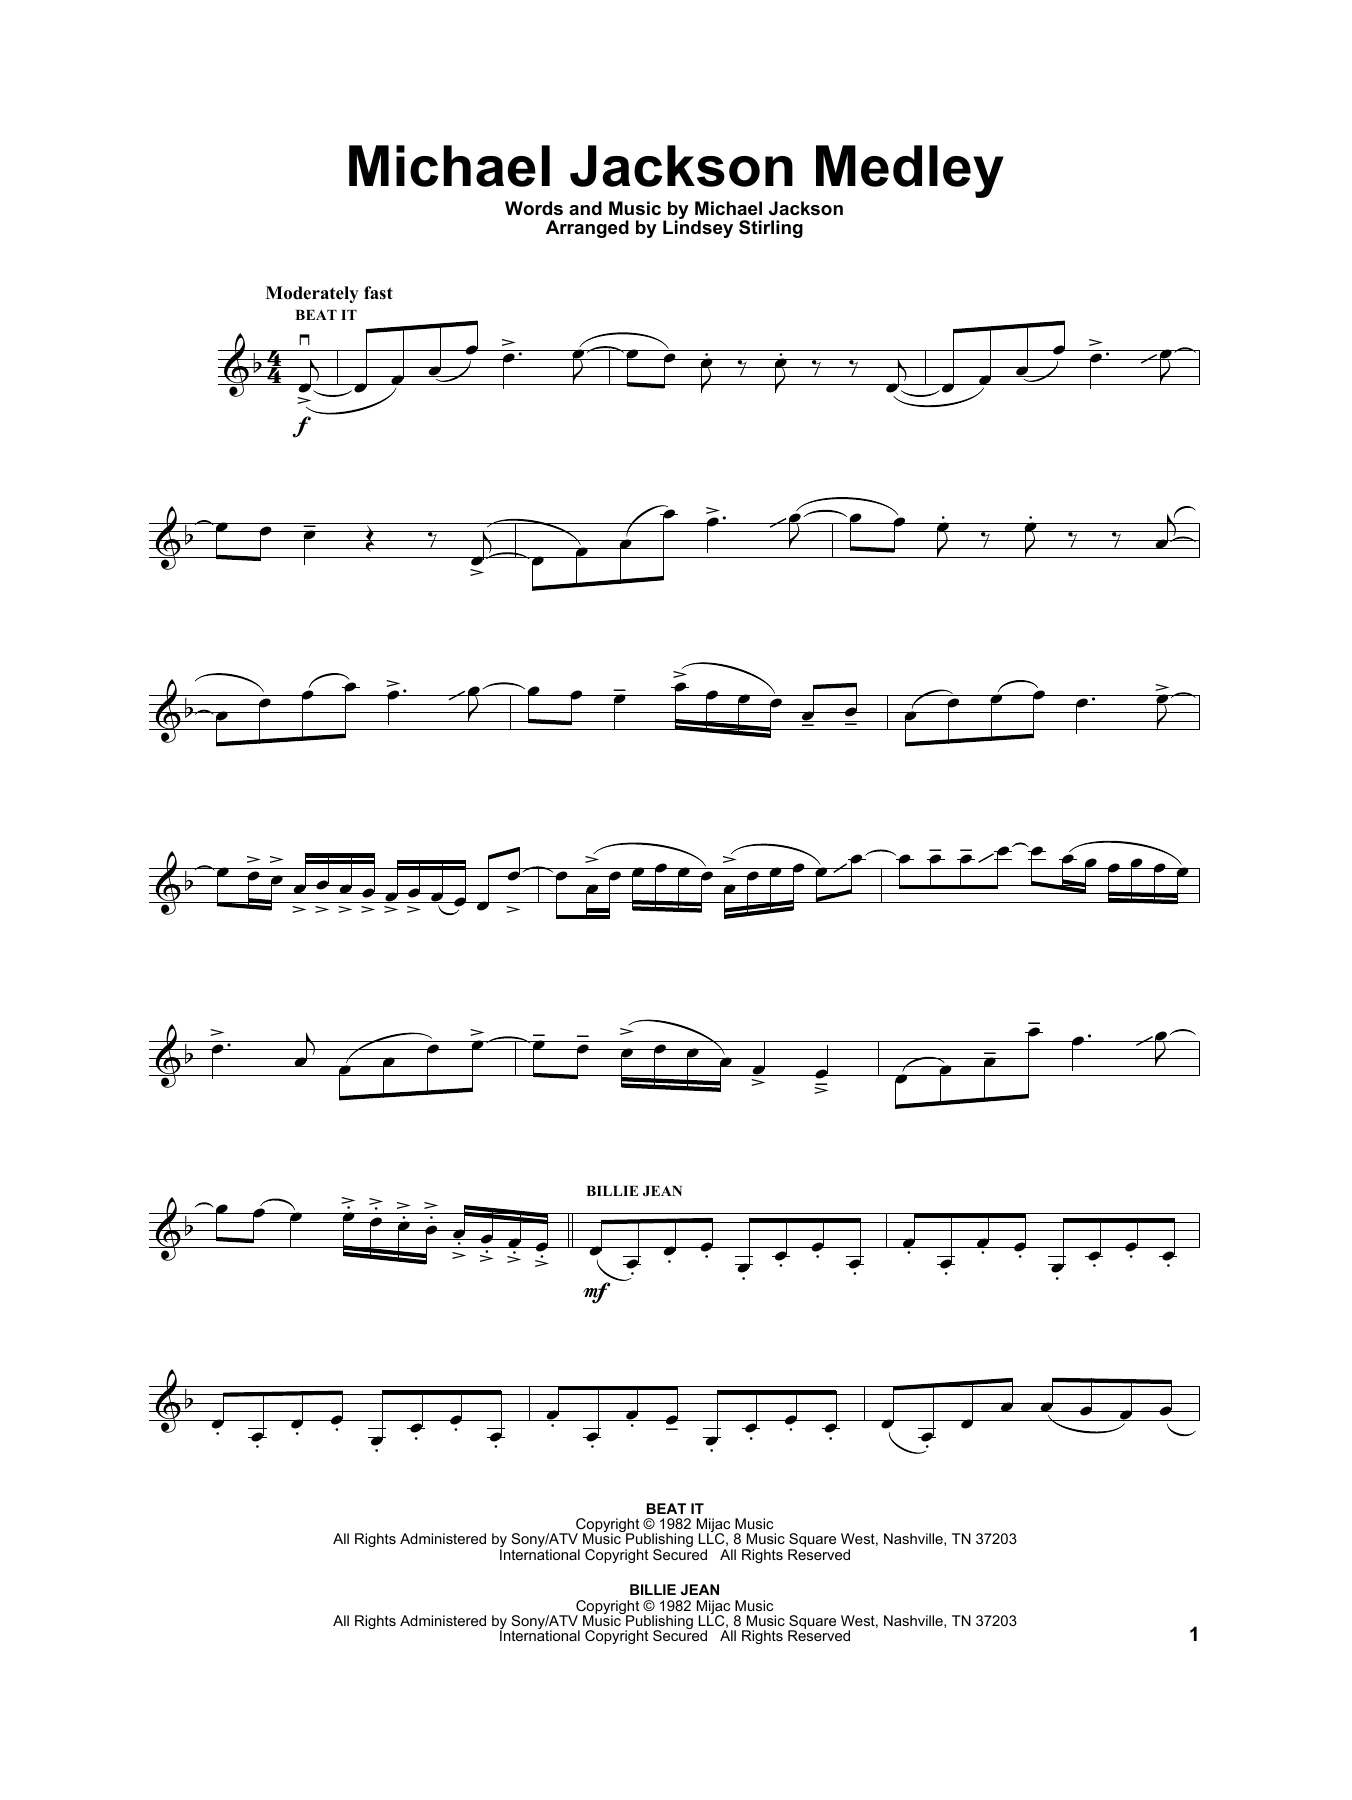 Lindsey Stirling Michael Jackson Medley Sheet Music Notes & Chords for Violin Solo - Download or Print PDF